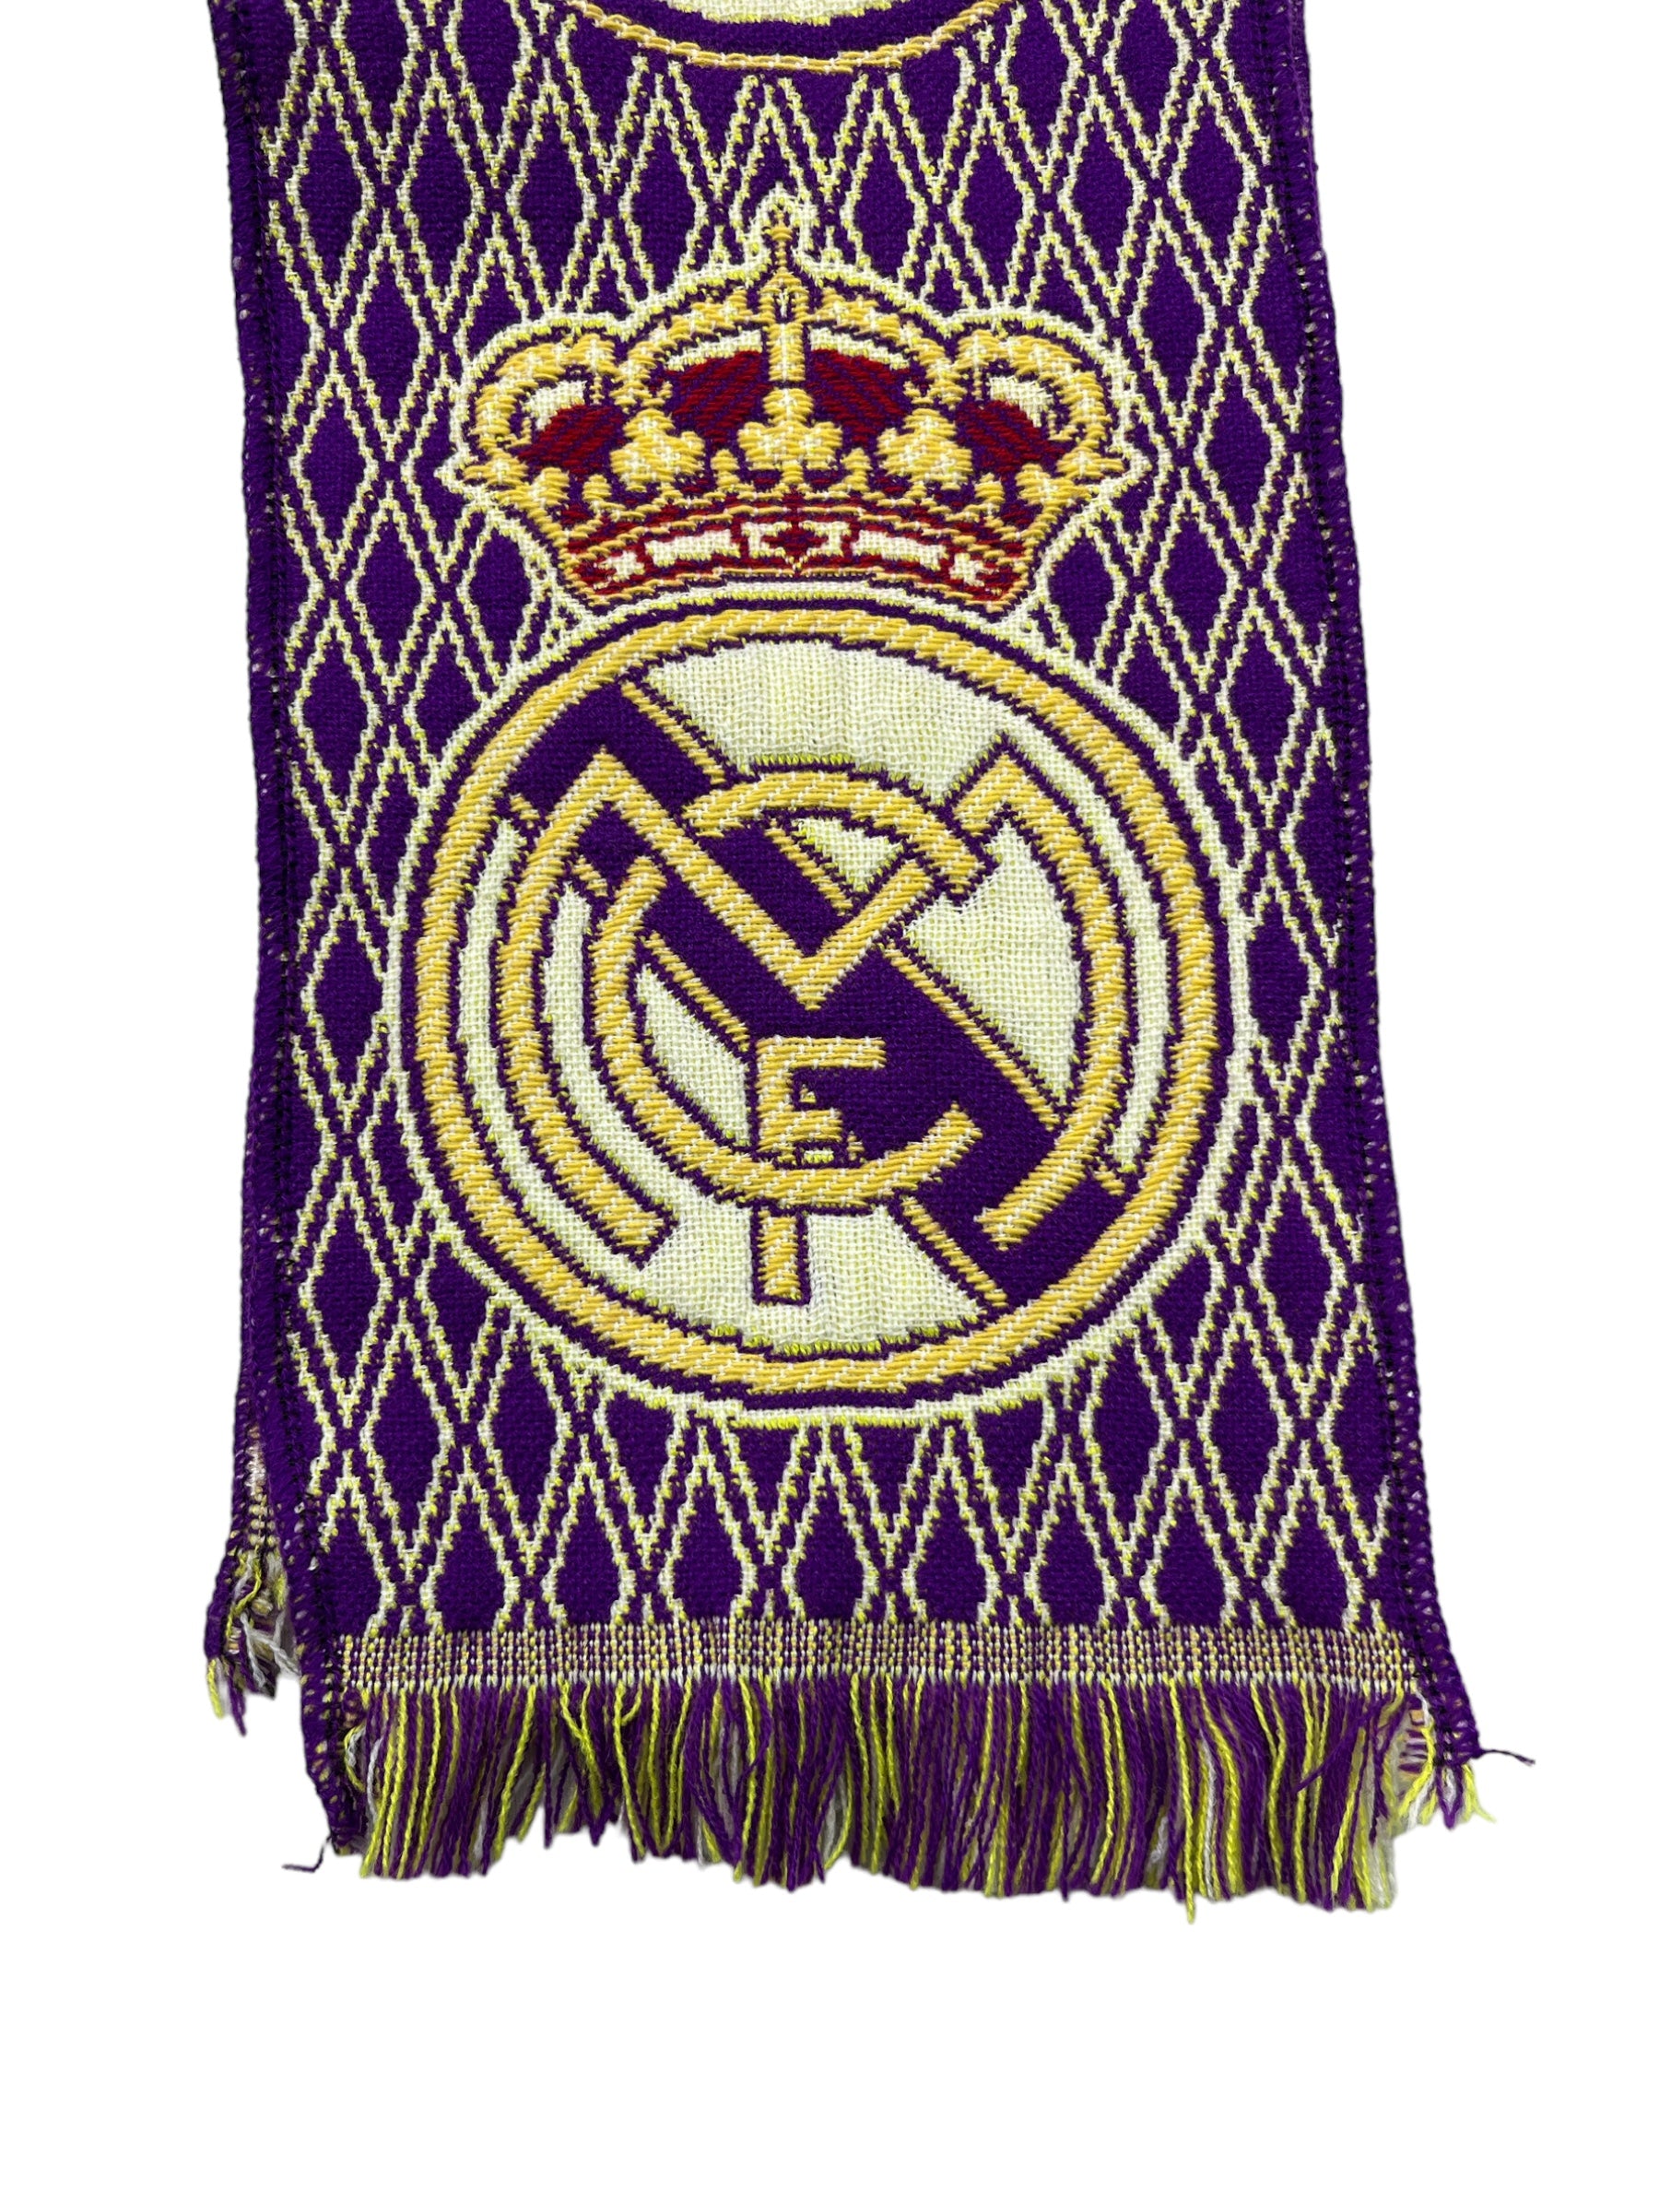 Vintage Real Madrid Scarf